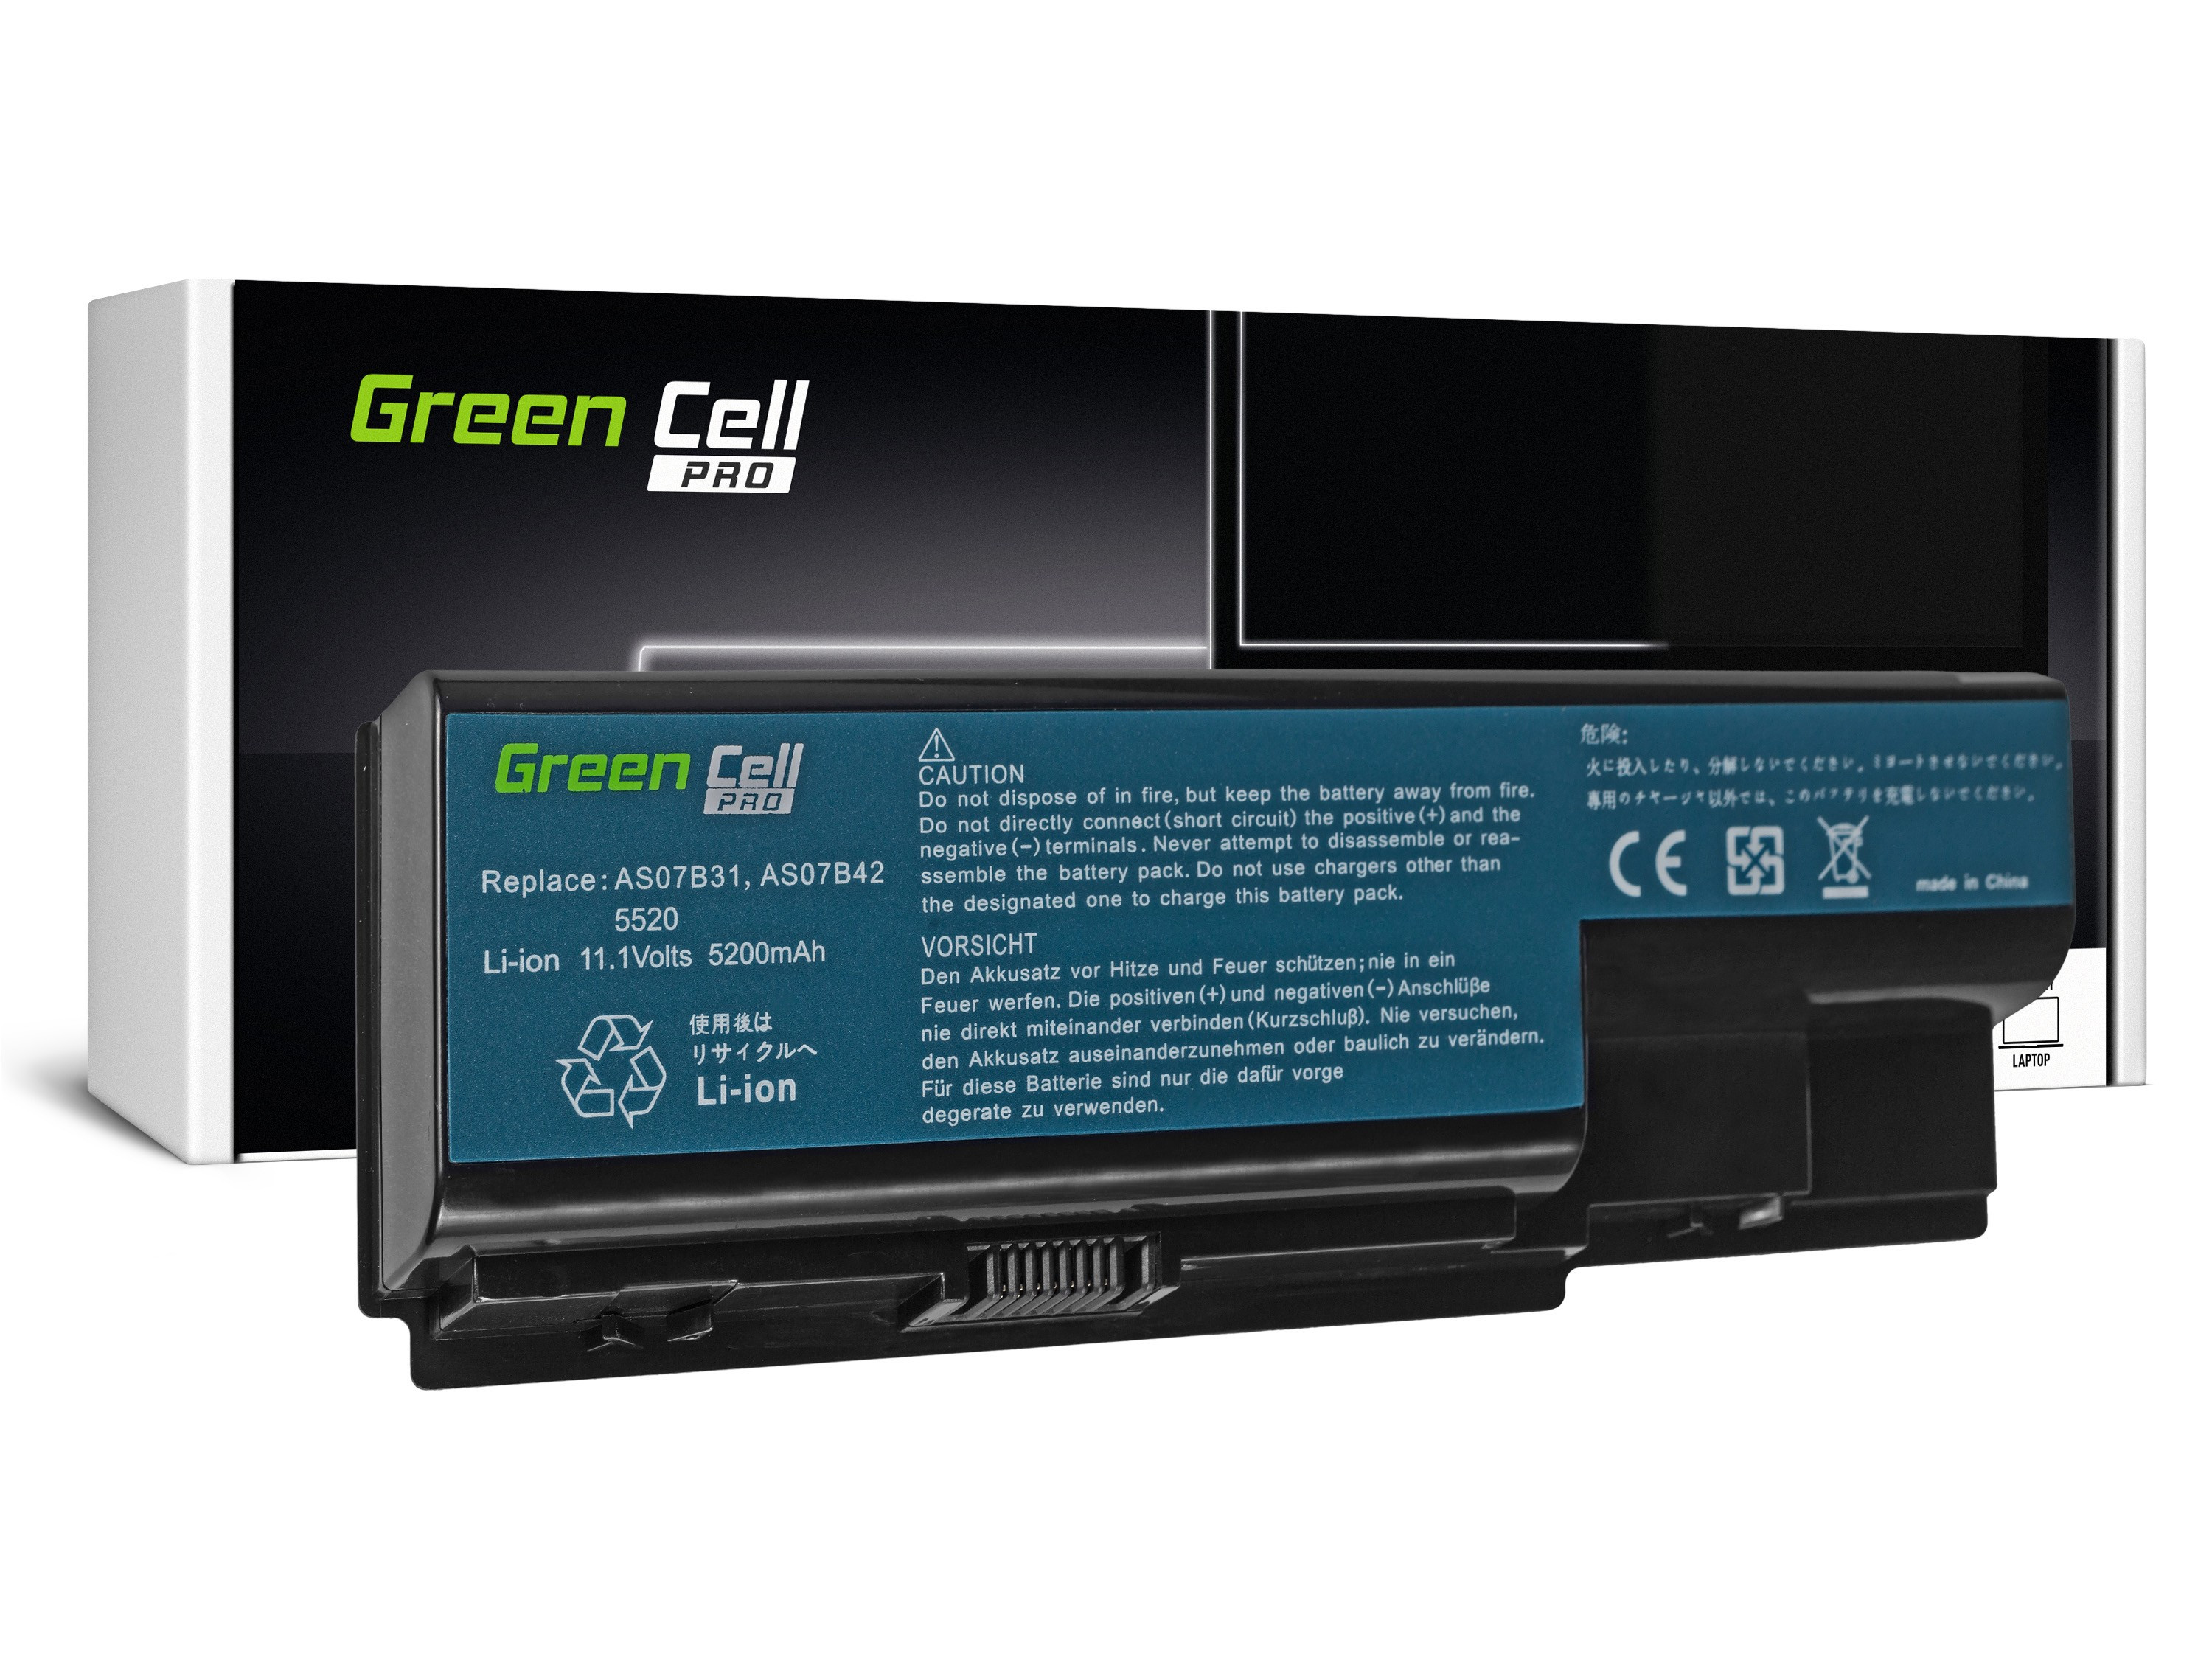 Green Cell AC03PRO Baterie Acer AS07B31 AS07B41 AS07B51 Acer Aspire 5220 5520 5720 7720 7520 5315 5739 6930 5739G 5200mAh Li-ion